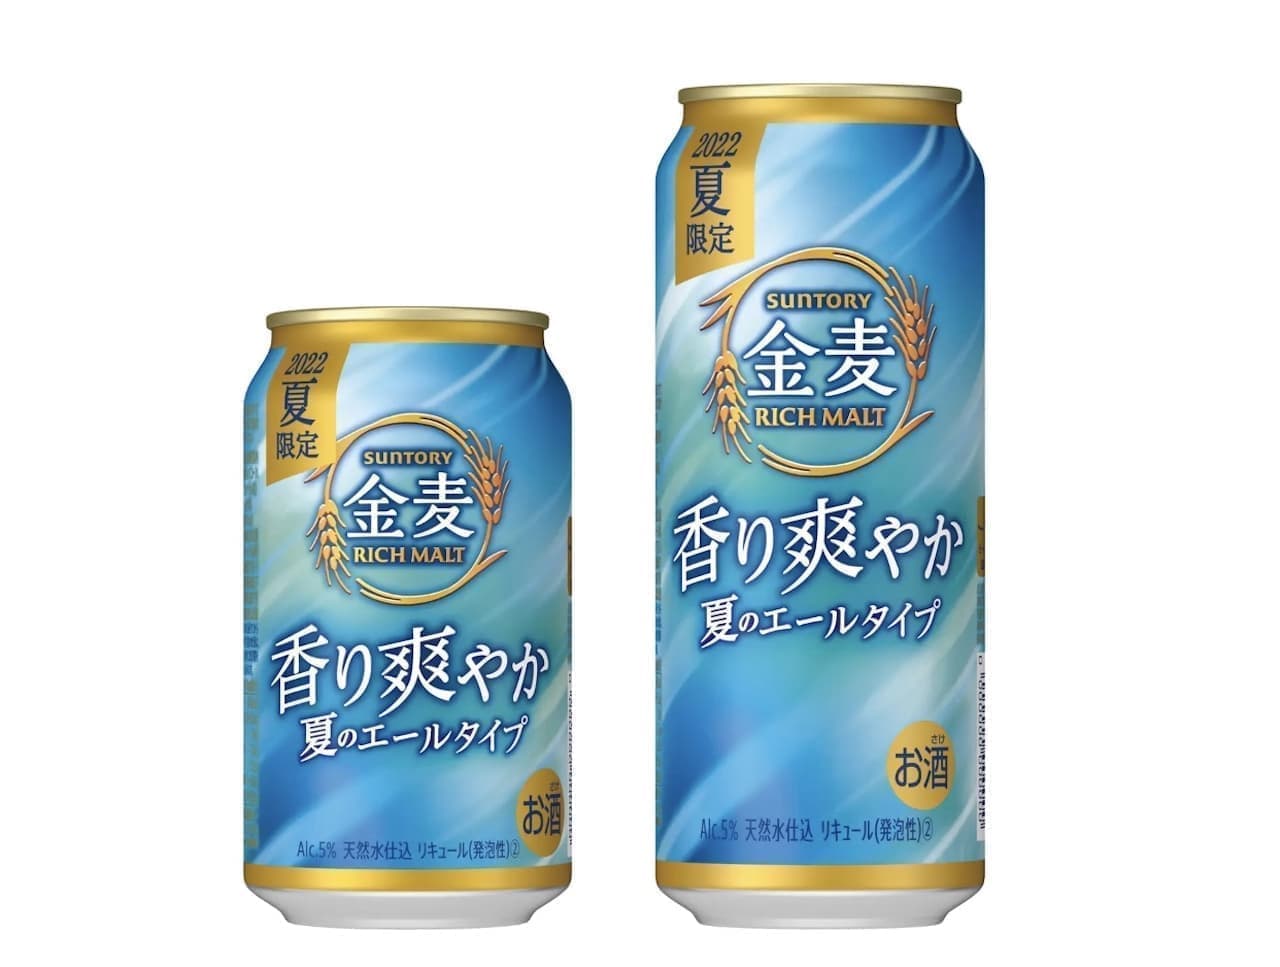 Kinmugi (Aroma Refreshing) from Suntory Beer